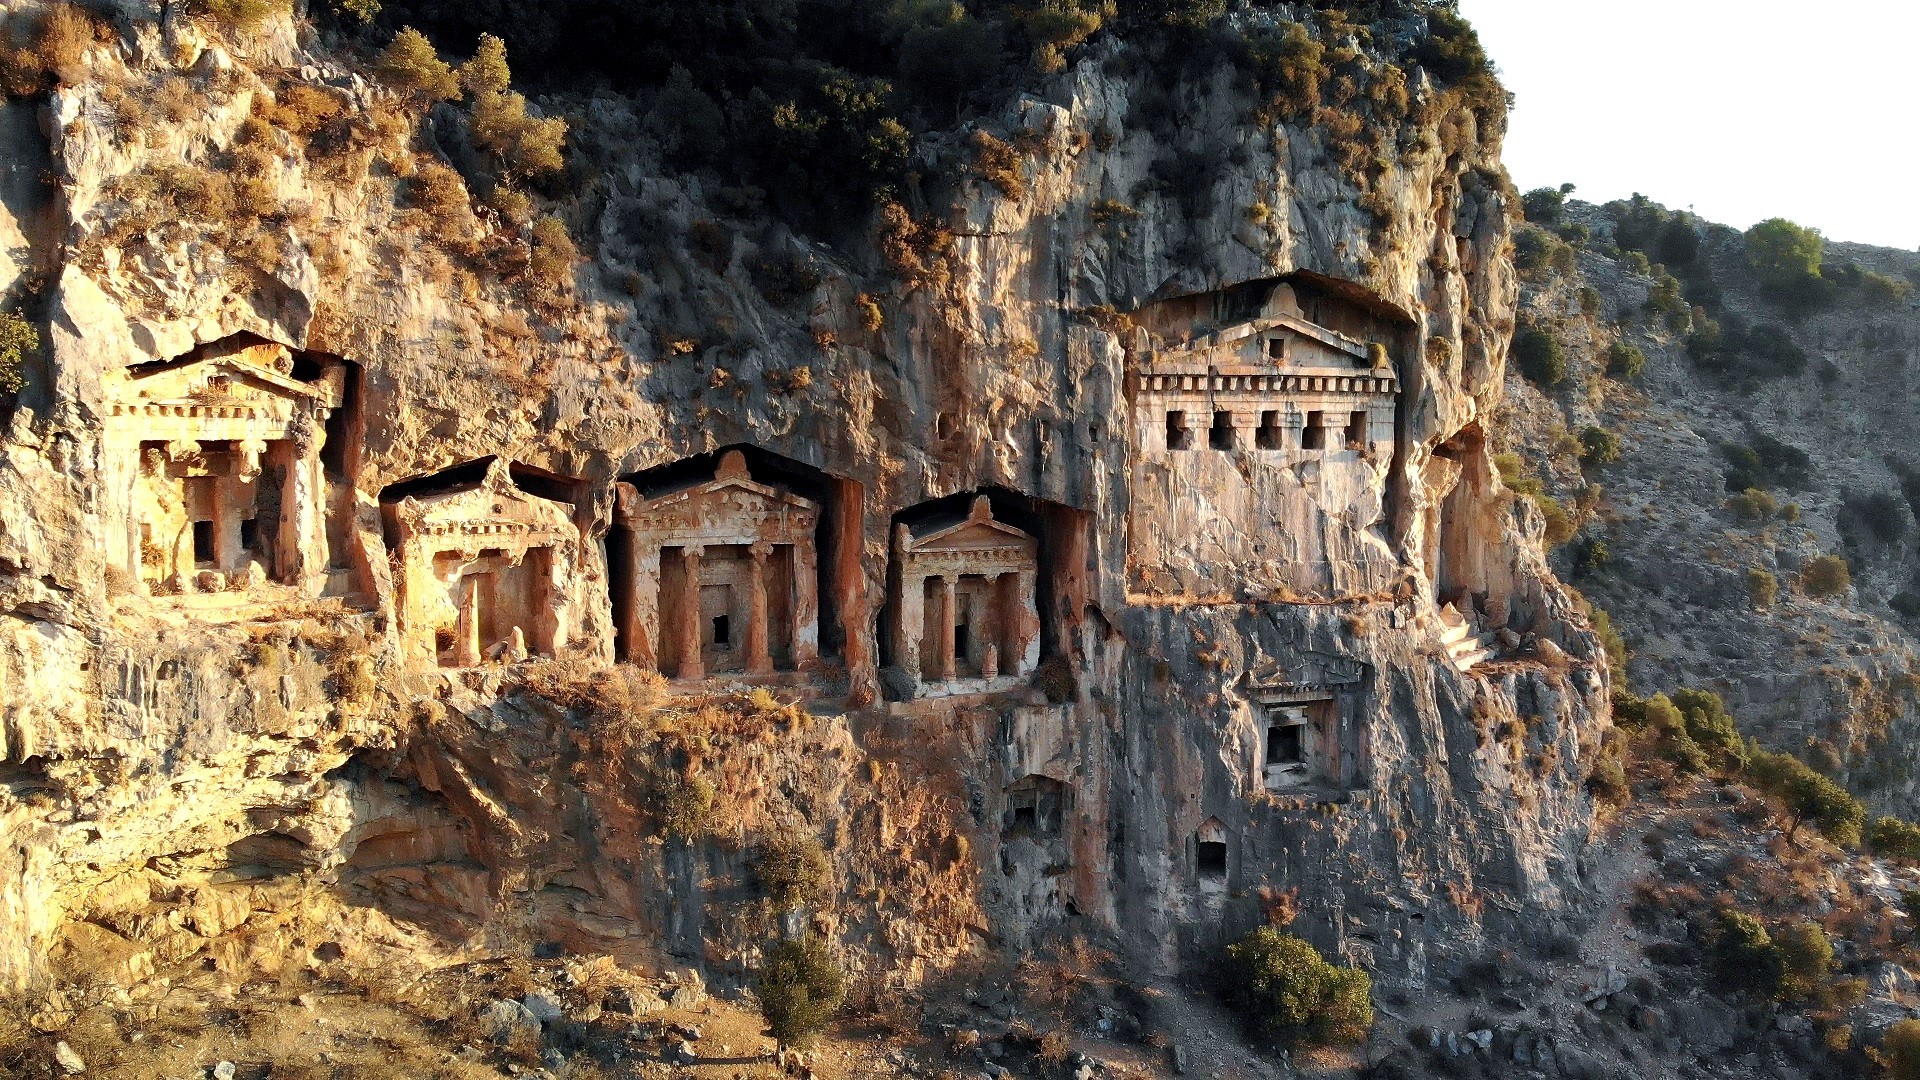 Kaunos Ancient Rock Tombs 2© Go Türkiye